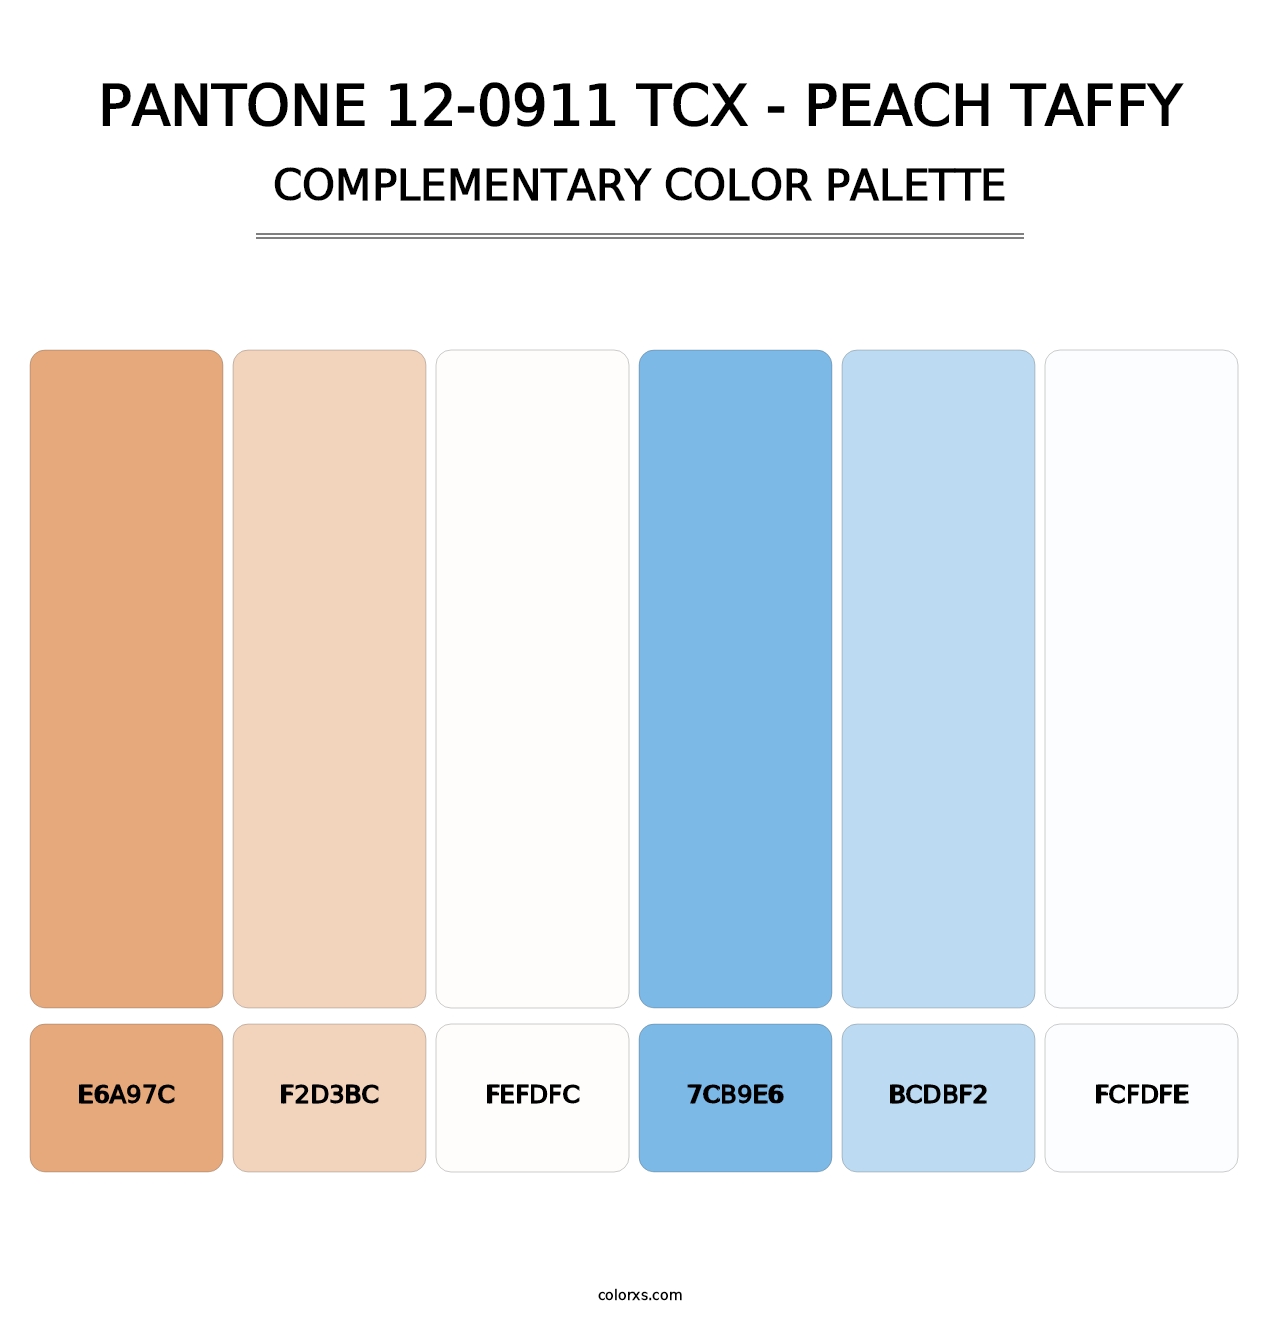 PANTONE 12-0911 TCX - Peach Taffy - Complementary Color Palette